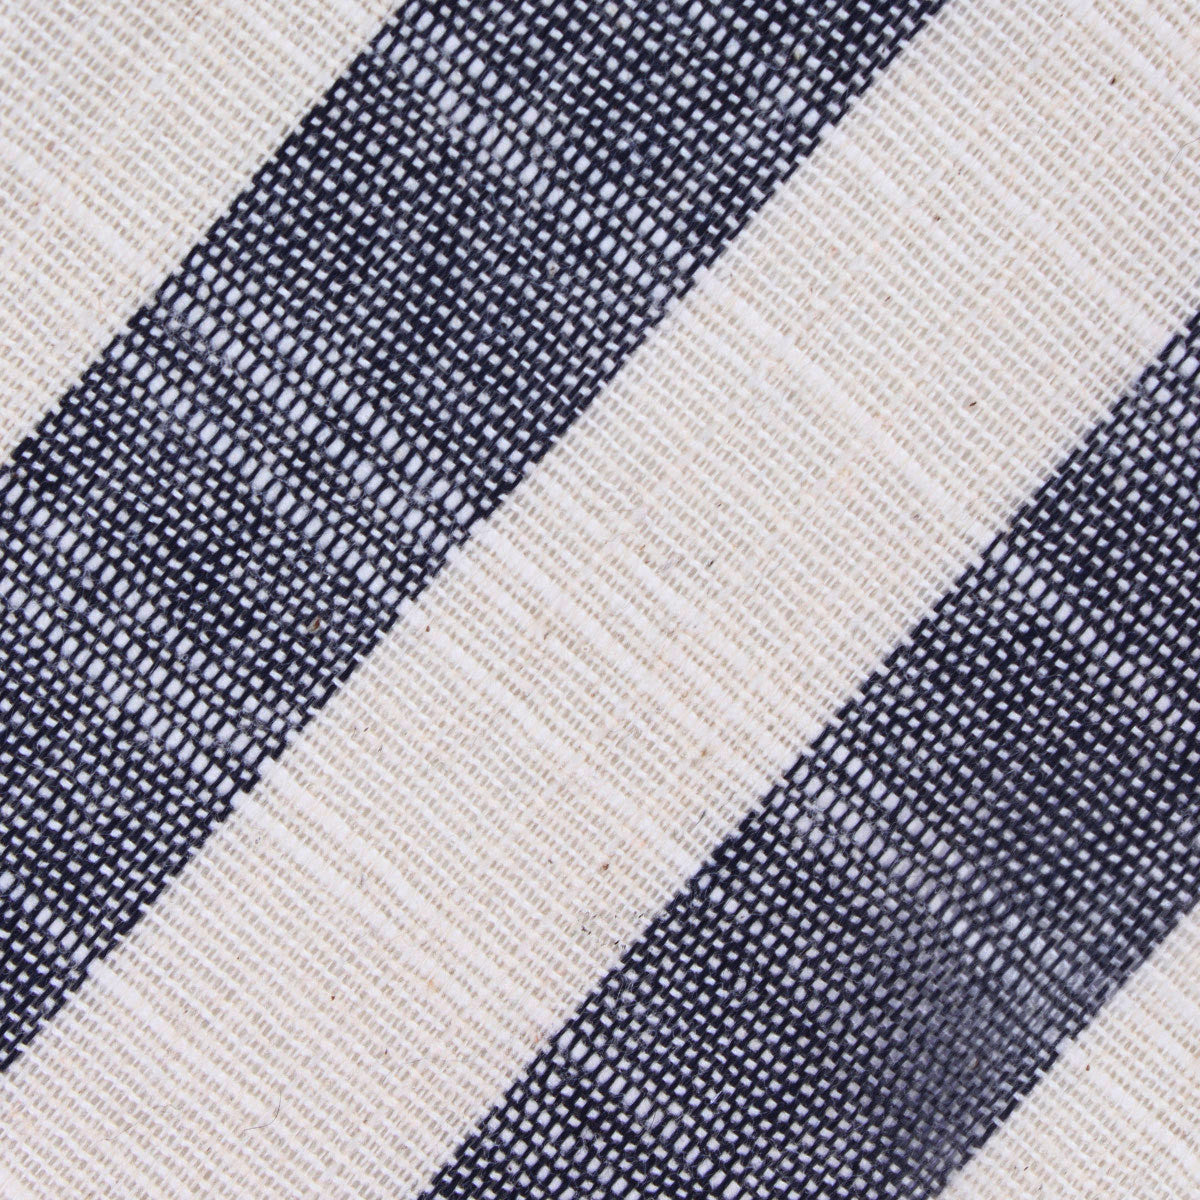 Kekova Blue Striped Linen Fabric Pocket Square